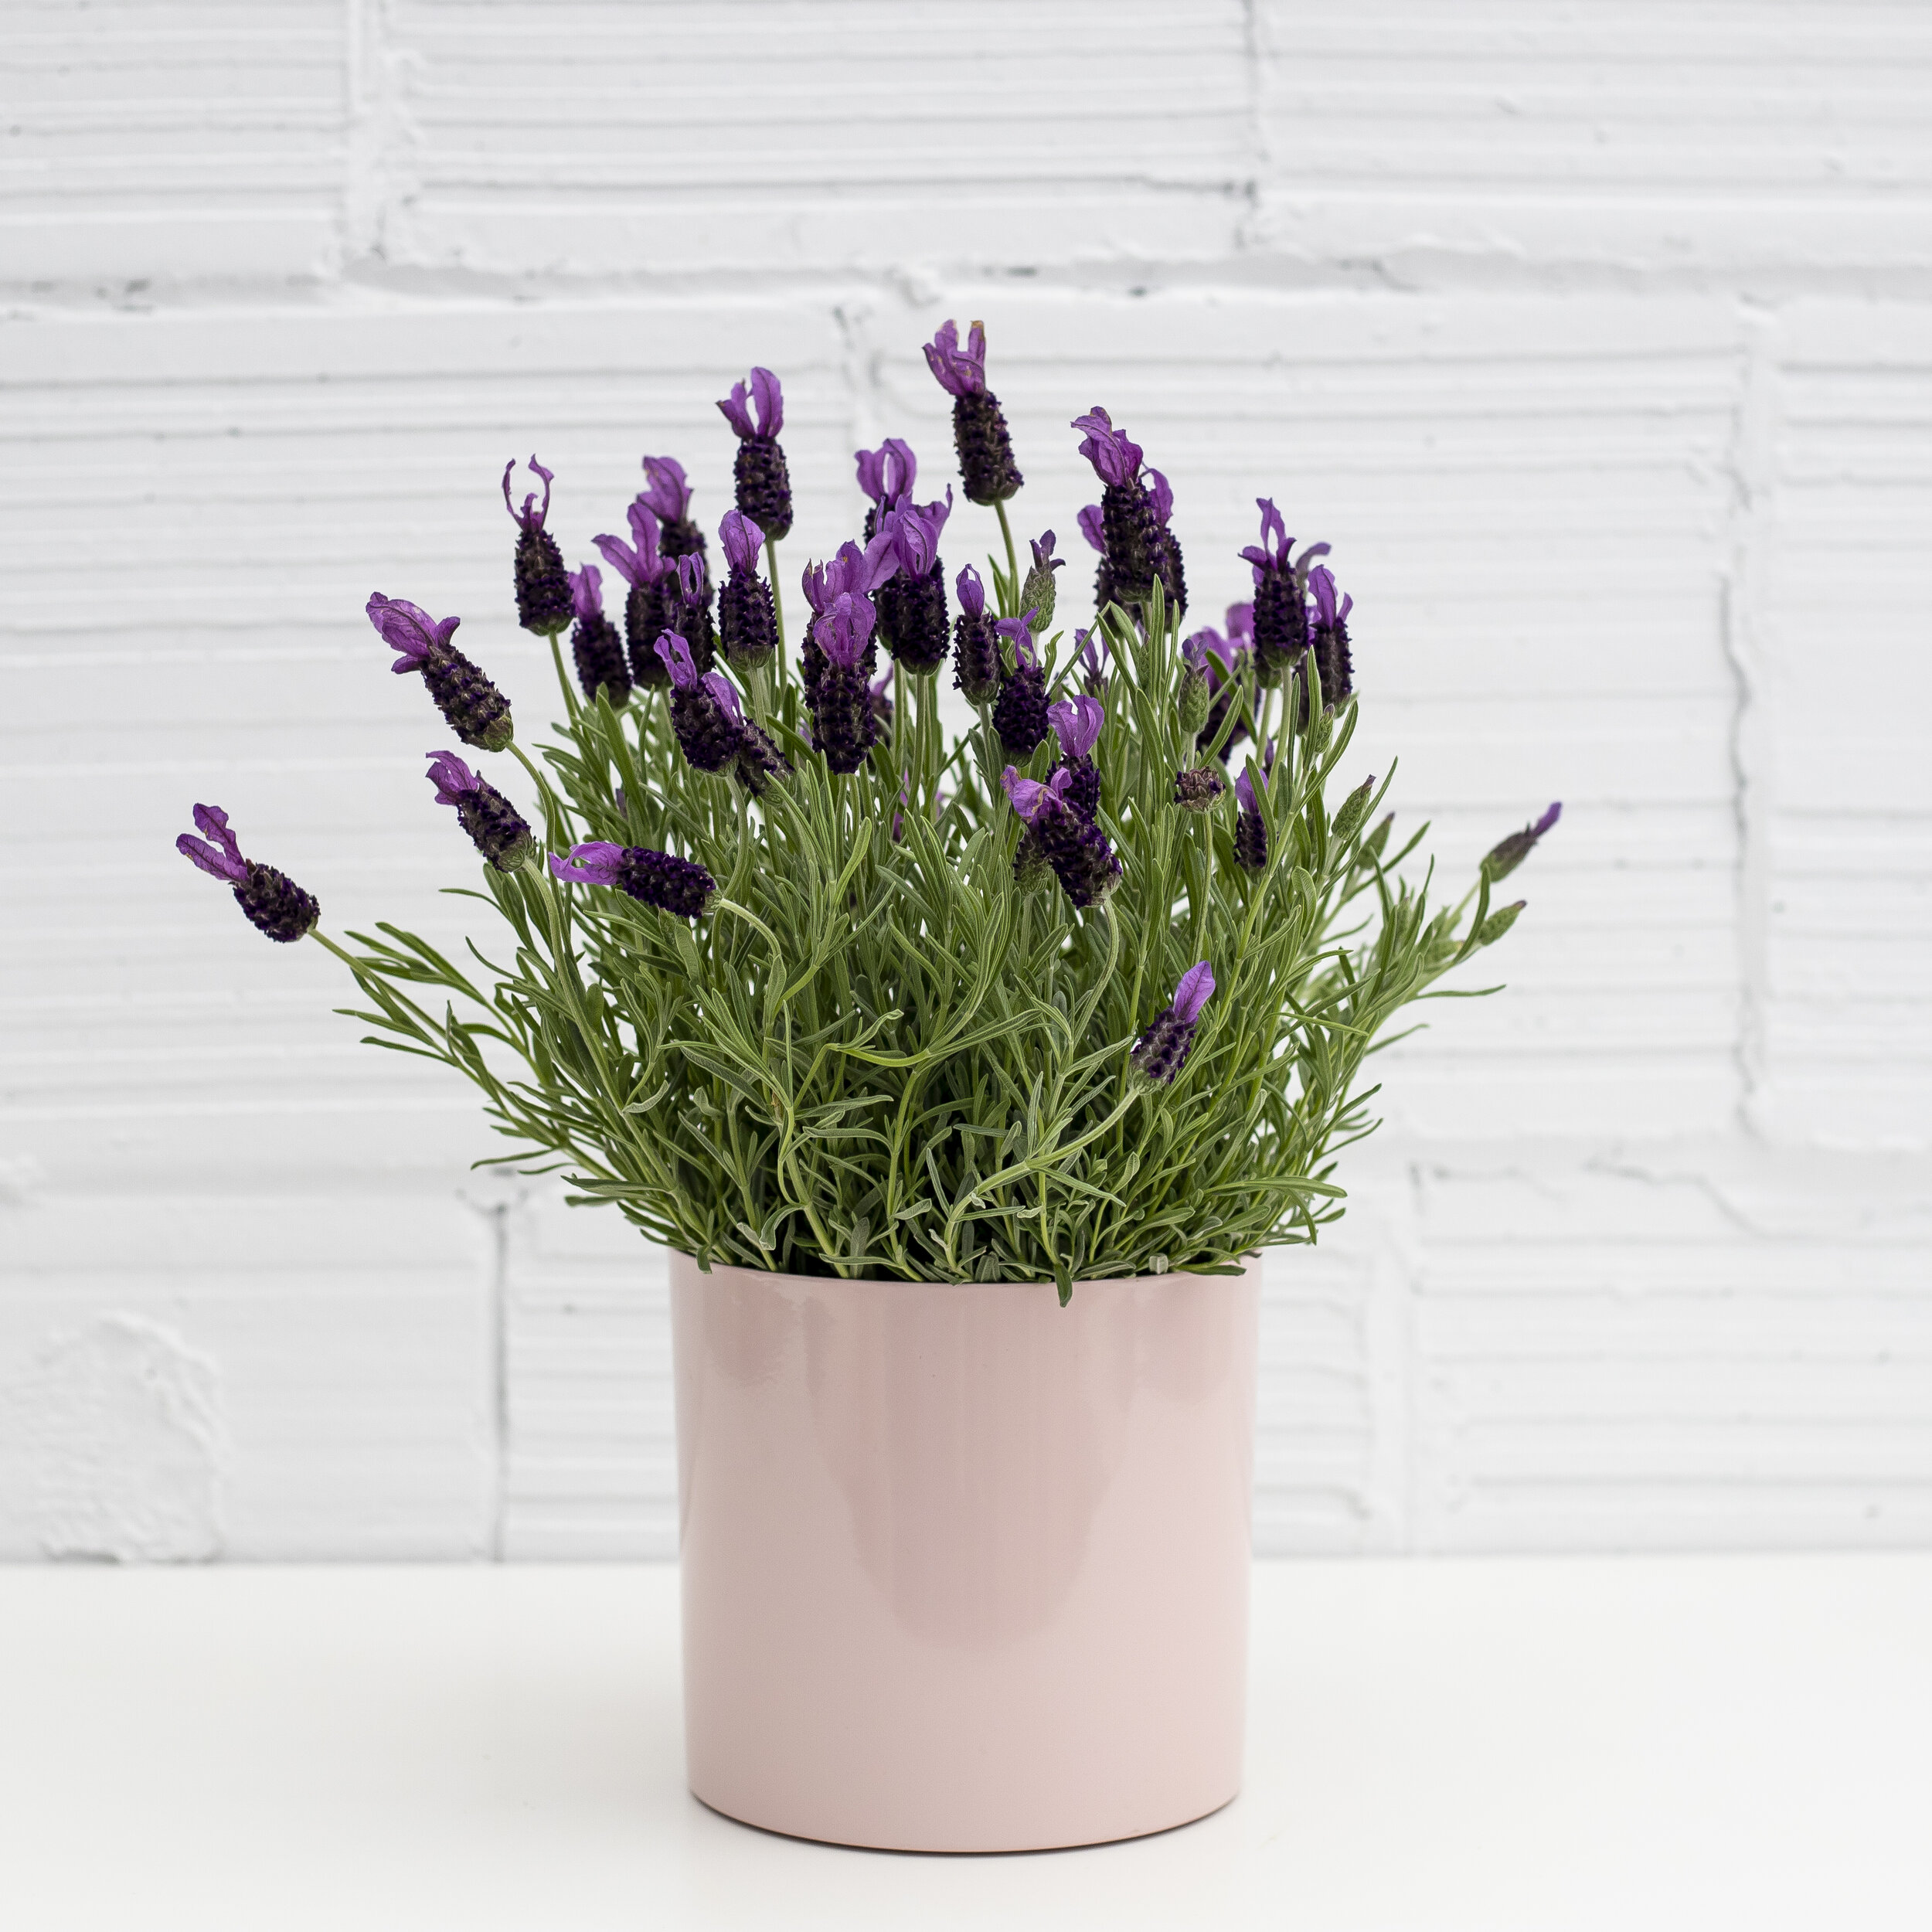 Spanish Lavender Plant Care